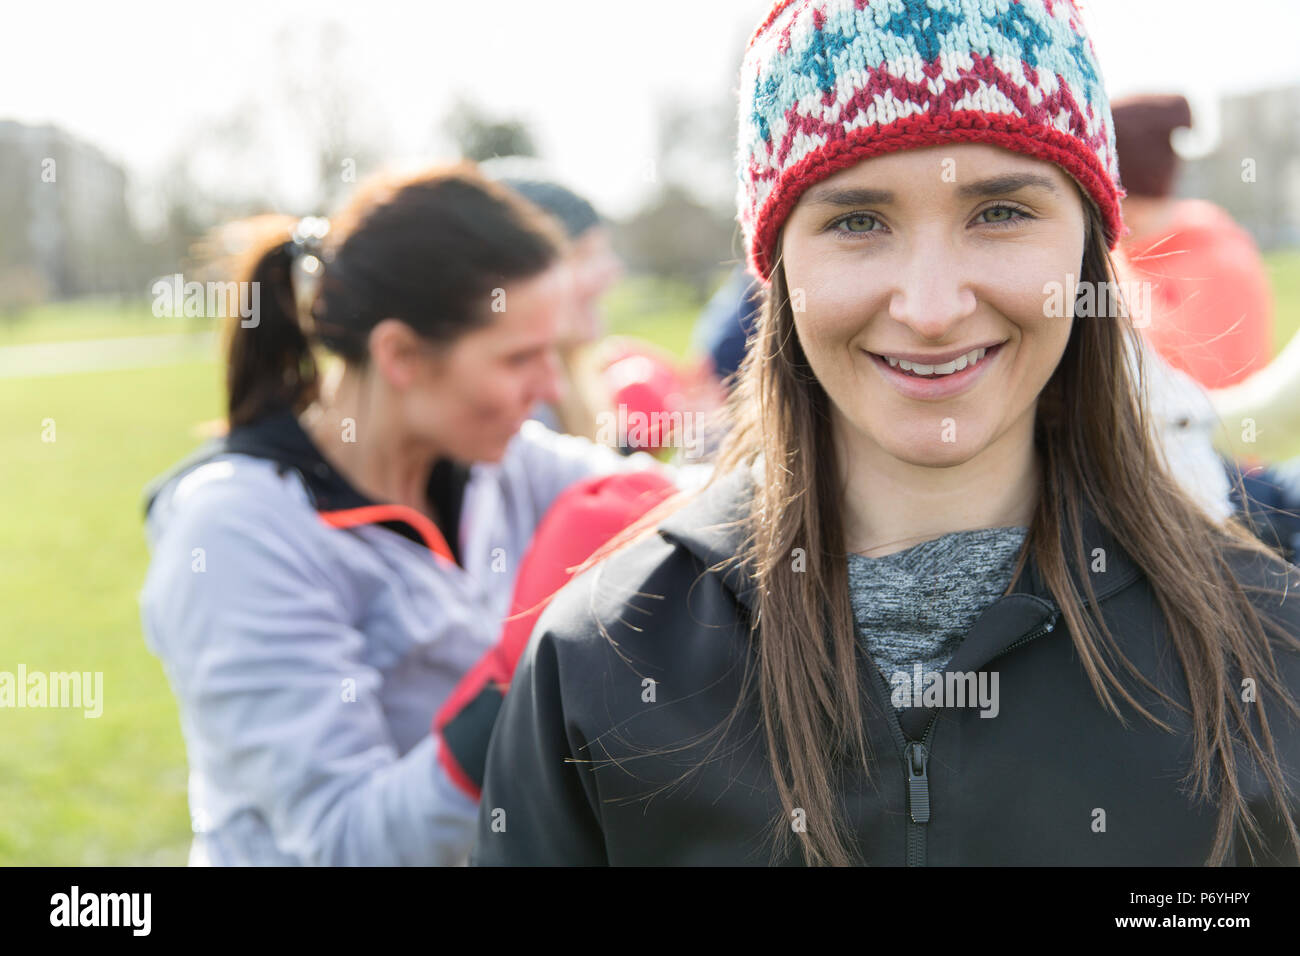 Portrait smiling, confident woman exercising in park Stock Photo